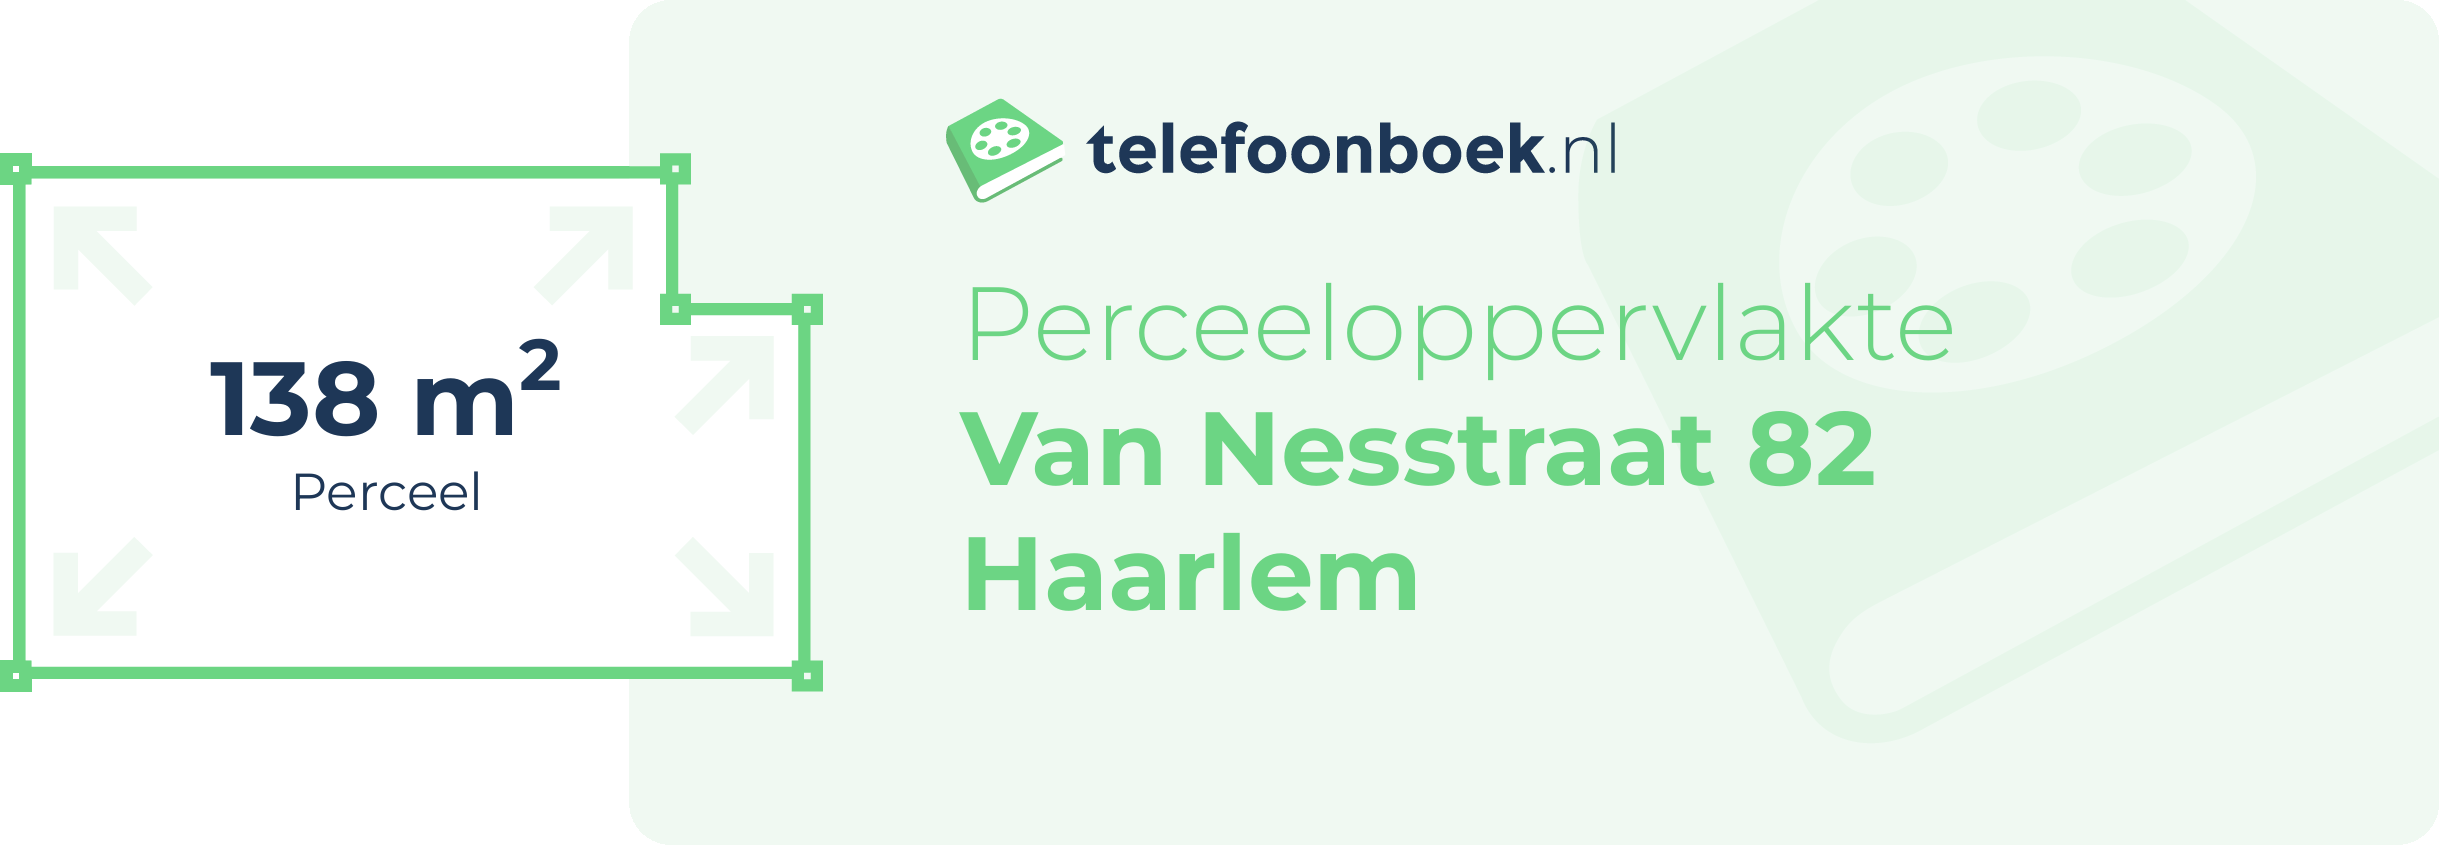 Perceeloppervlakte Van Nesstraat 82 Haarlem